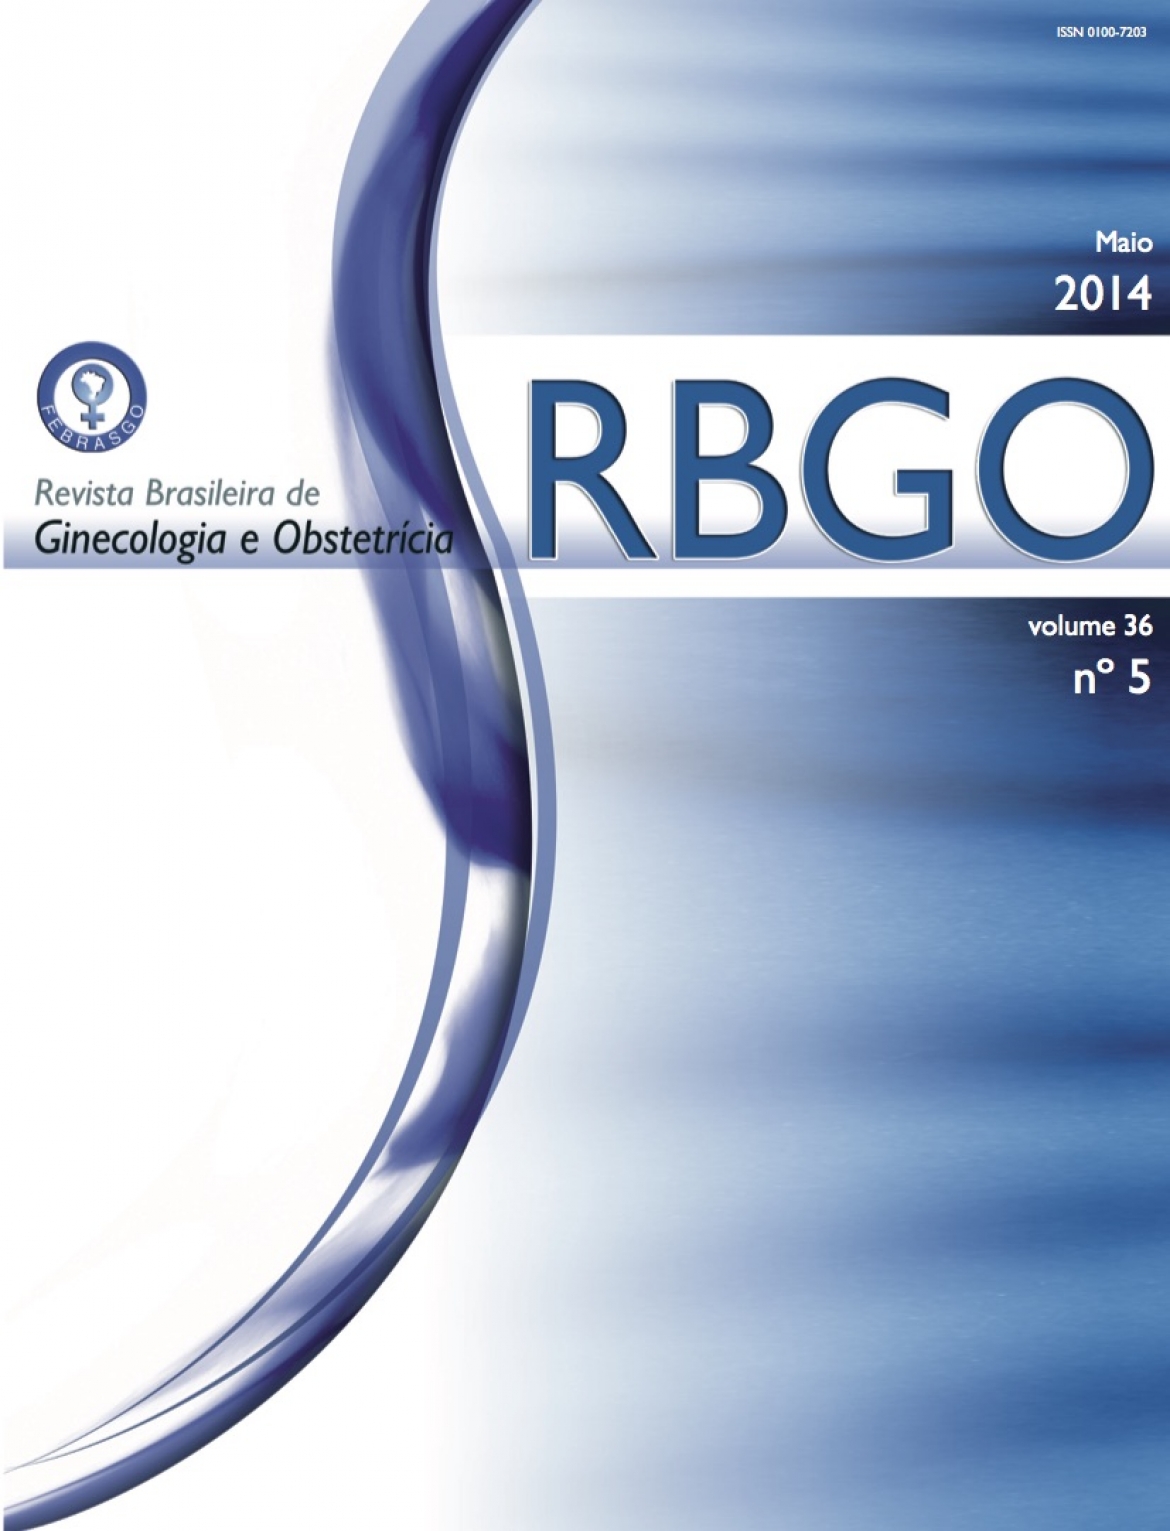 Revista Brasileira de Ginecologia e Obstetrícia – 2014 /Vol. 36 nº5